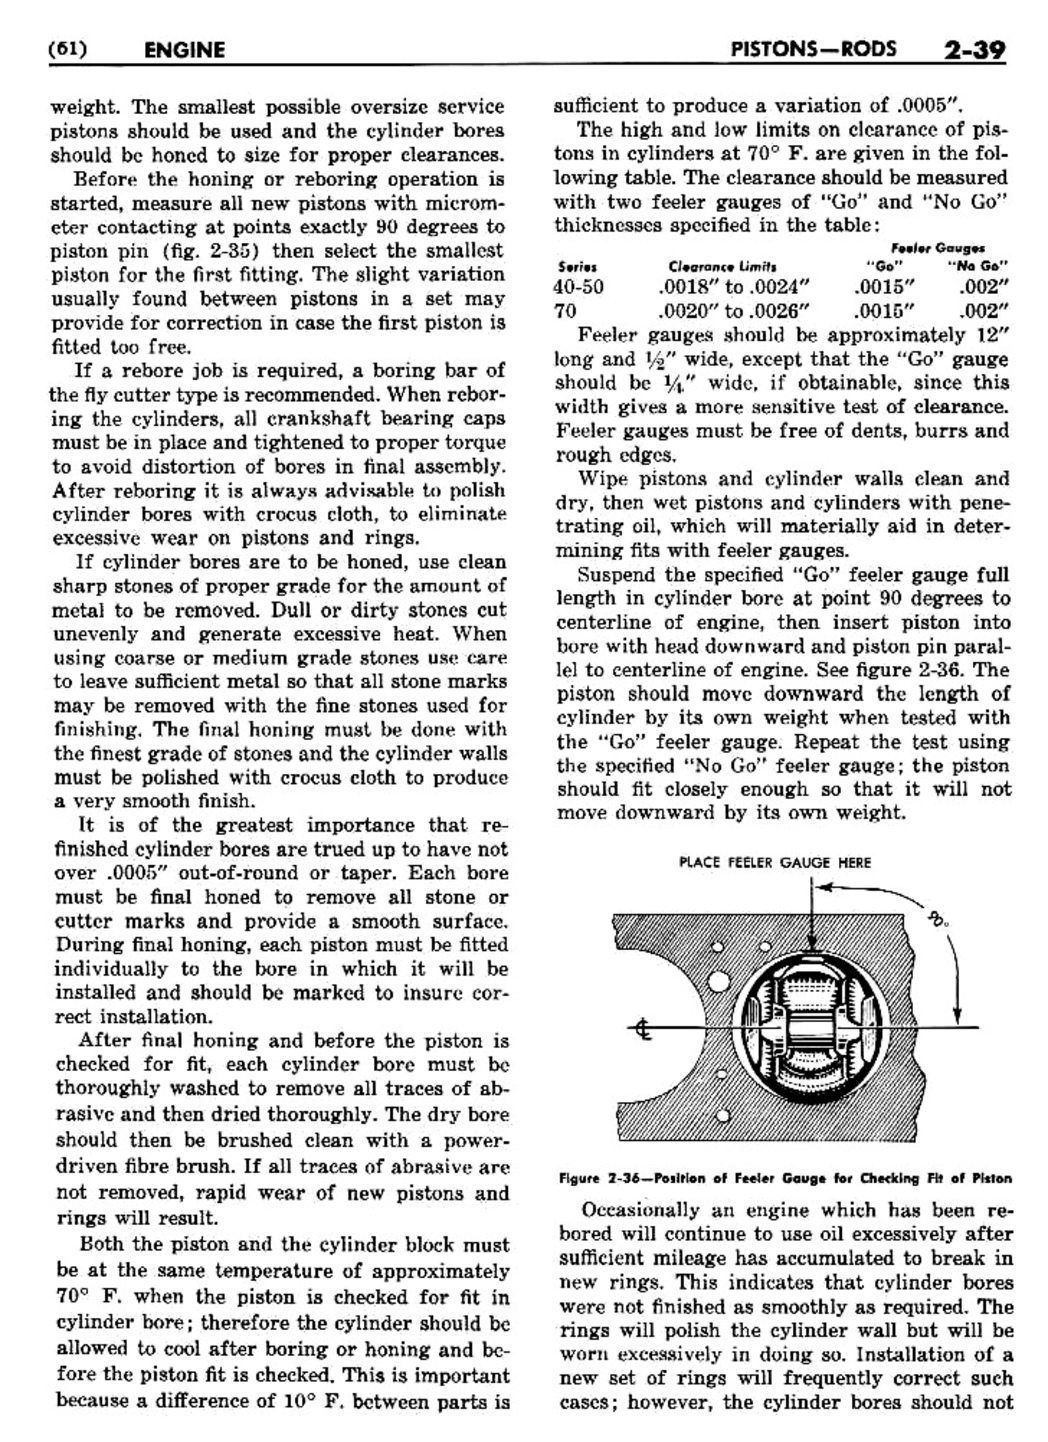 n_03 1948 Buick Shop Manual - Engine-039-039.jpg